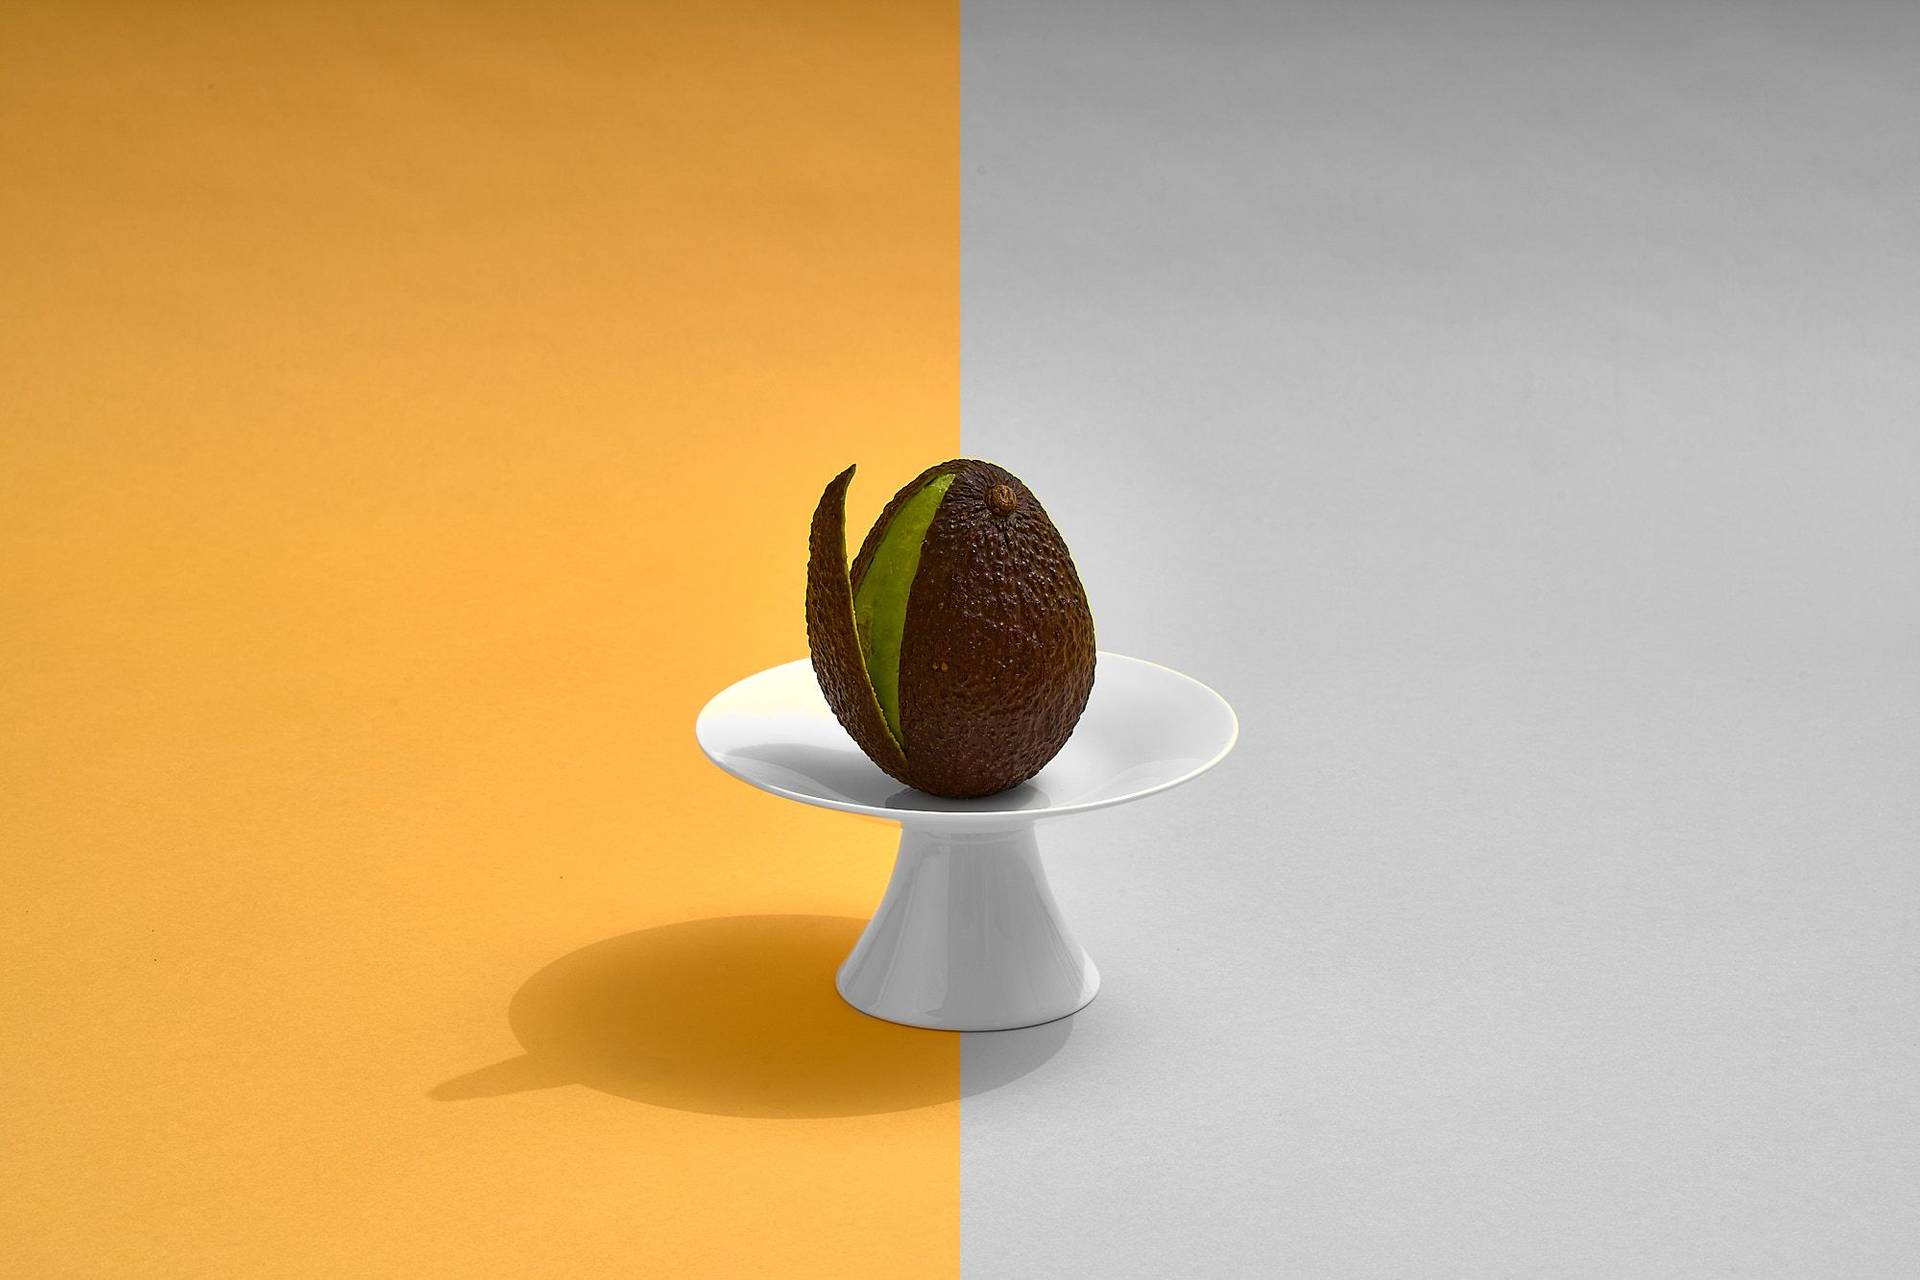 avocado on white plate on yellow background